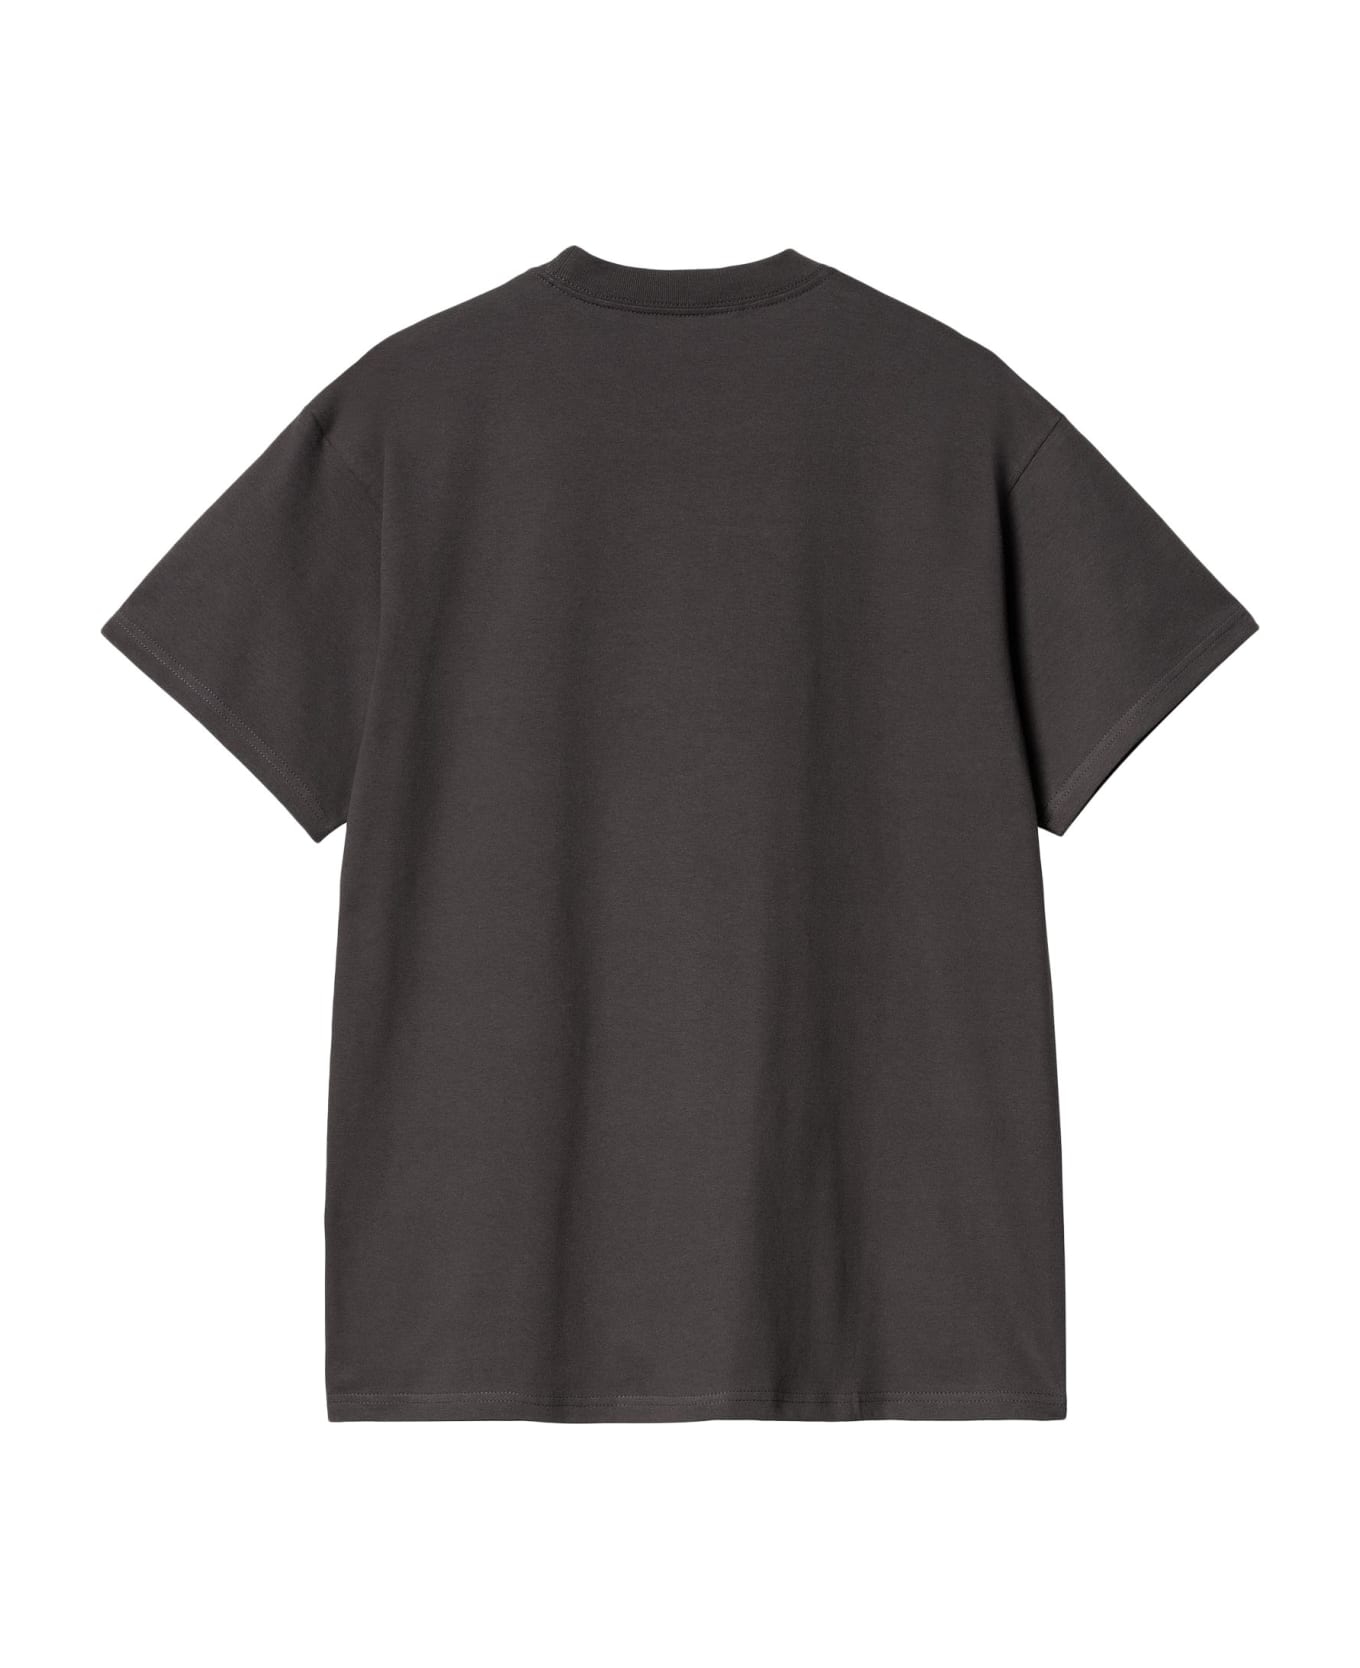 Carhartt T-shirts And Polos Black - Black